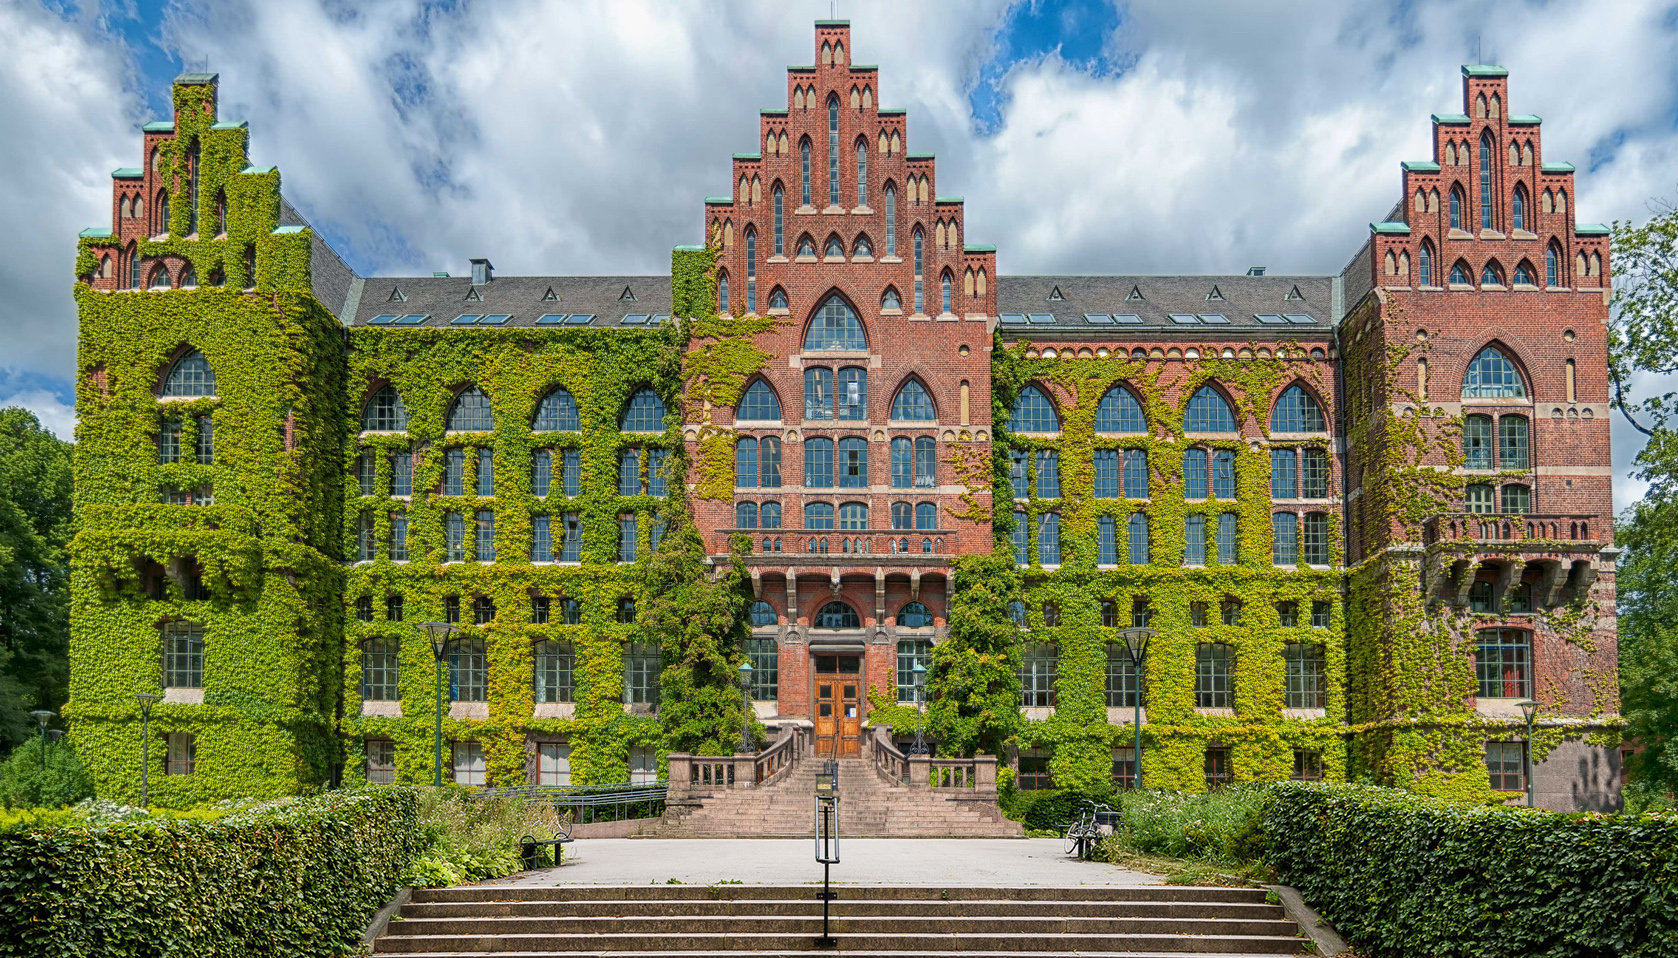 Universitetsbiblioteket i Lund är Sveriges vackraste byggnad